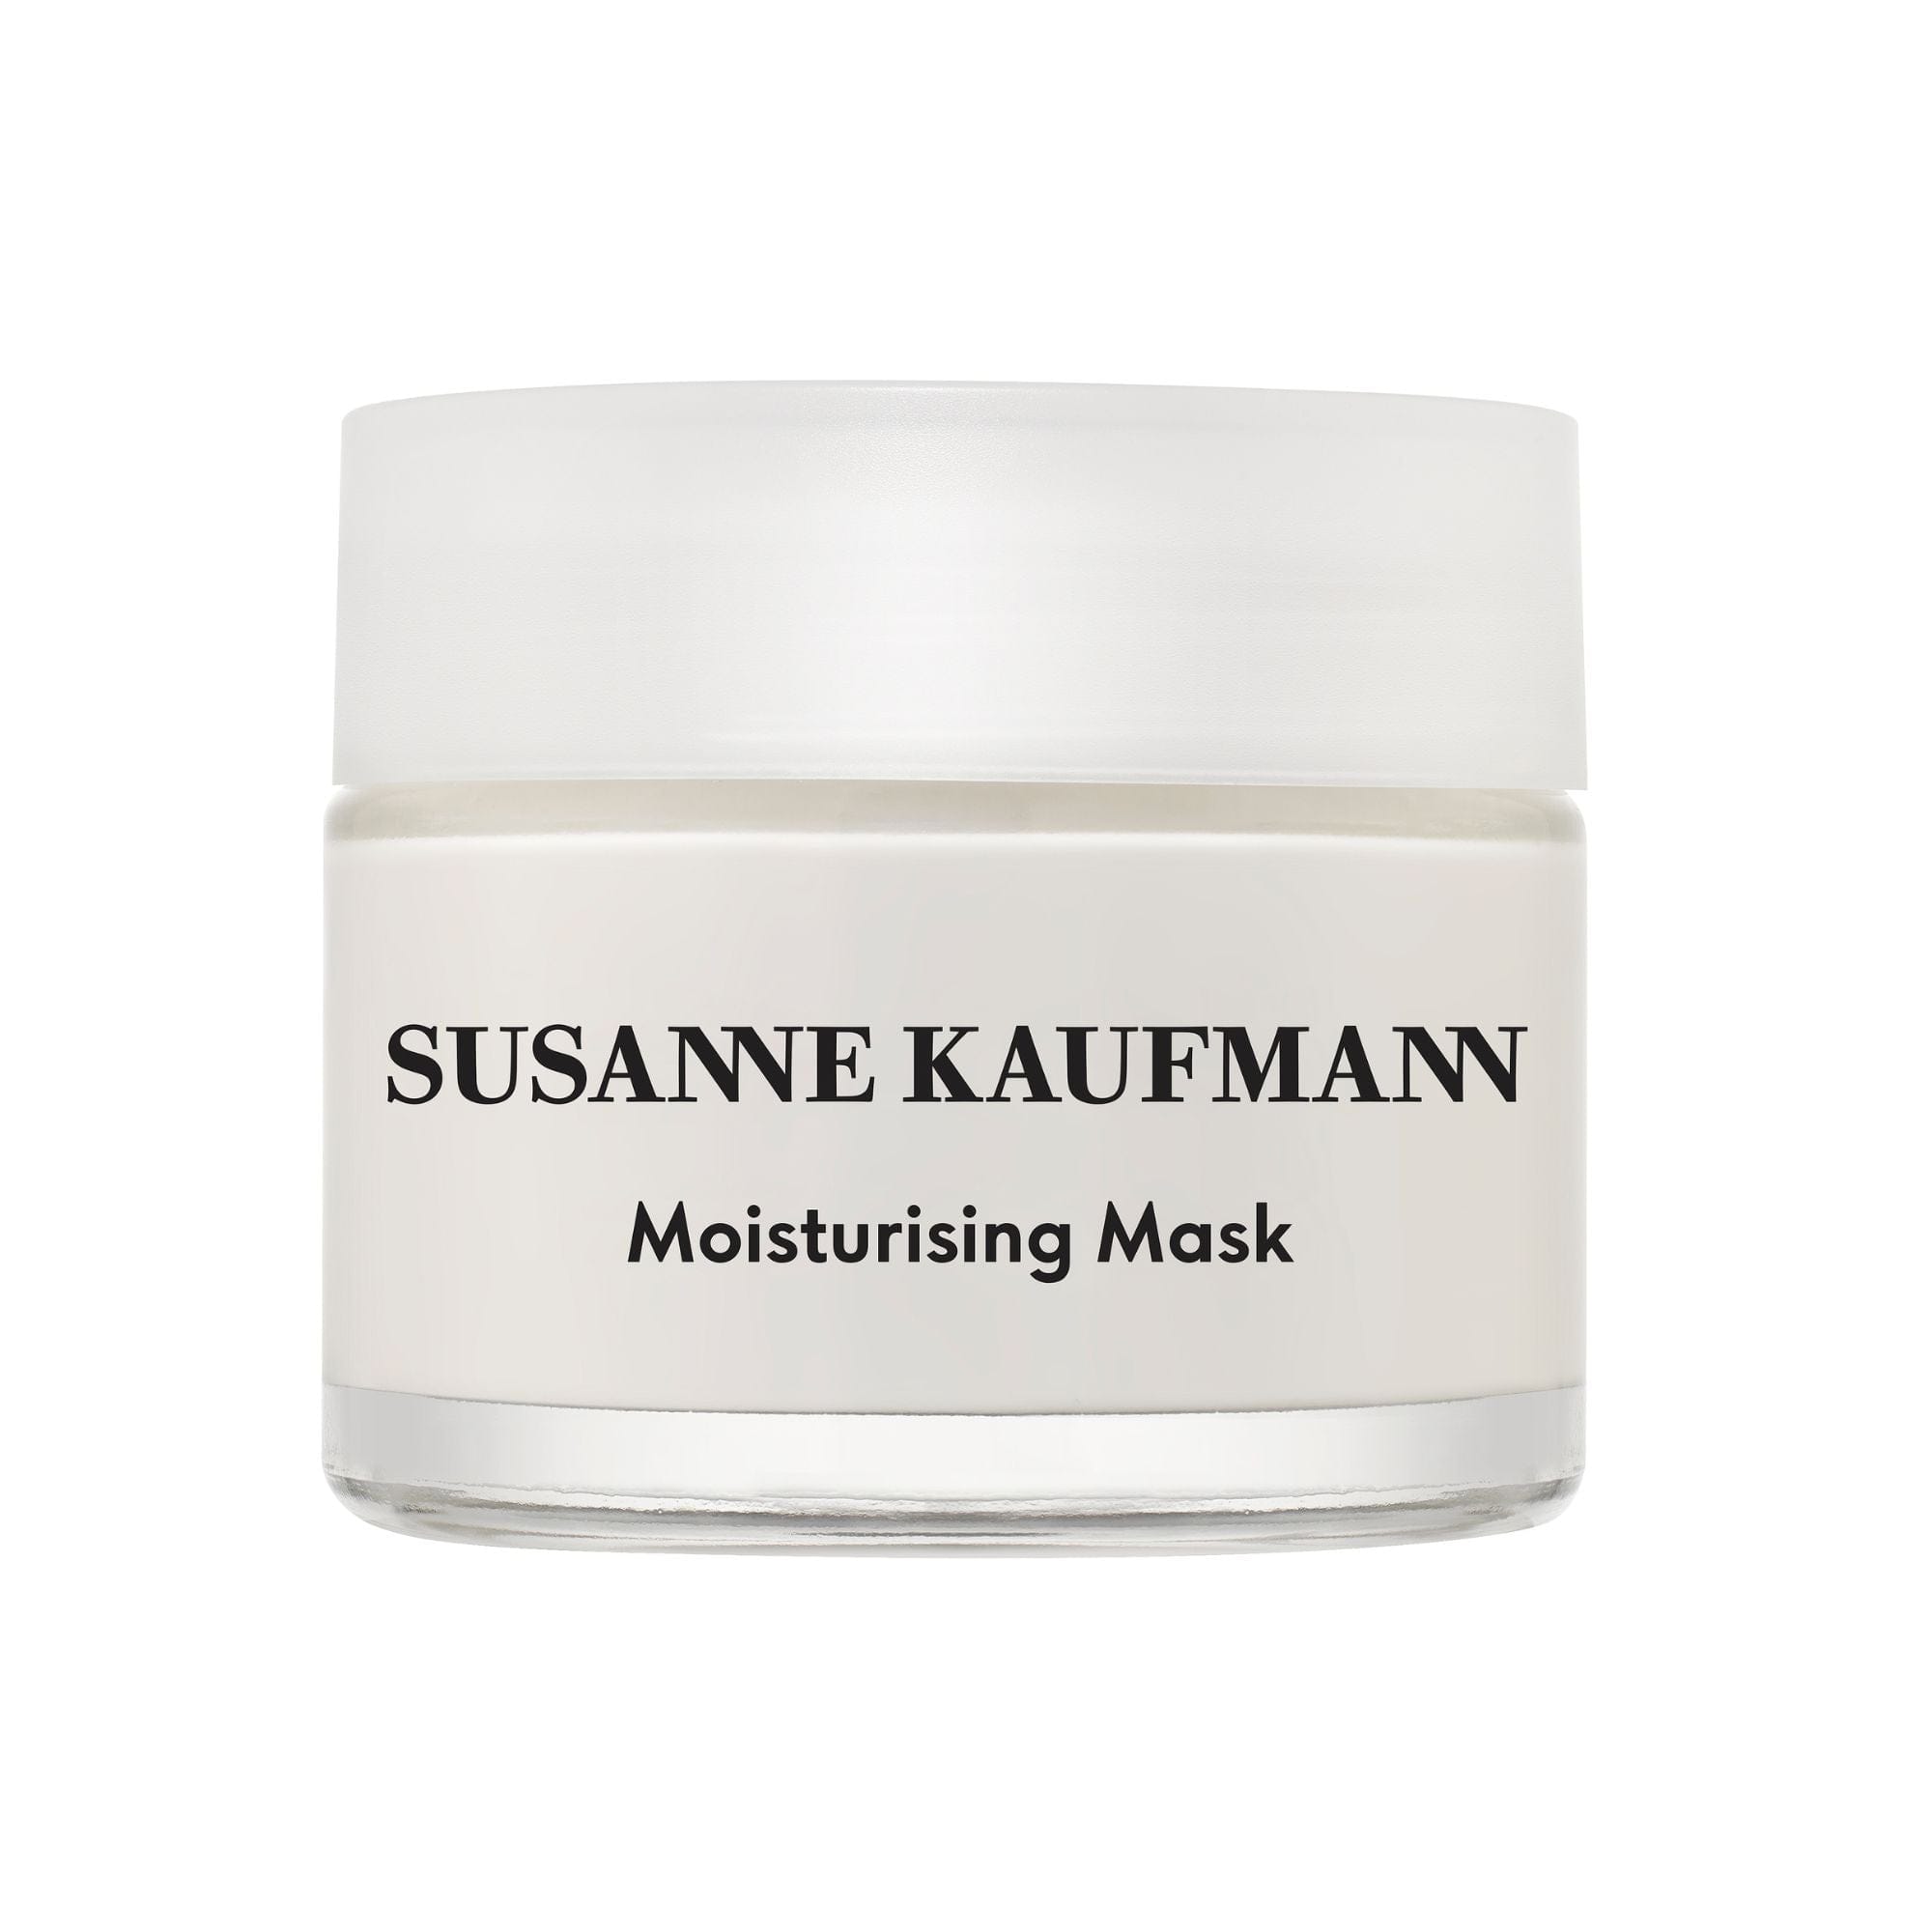 Moisturising Mask Susanne Kaufmann Mascarilla hidratante